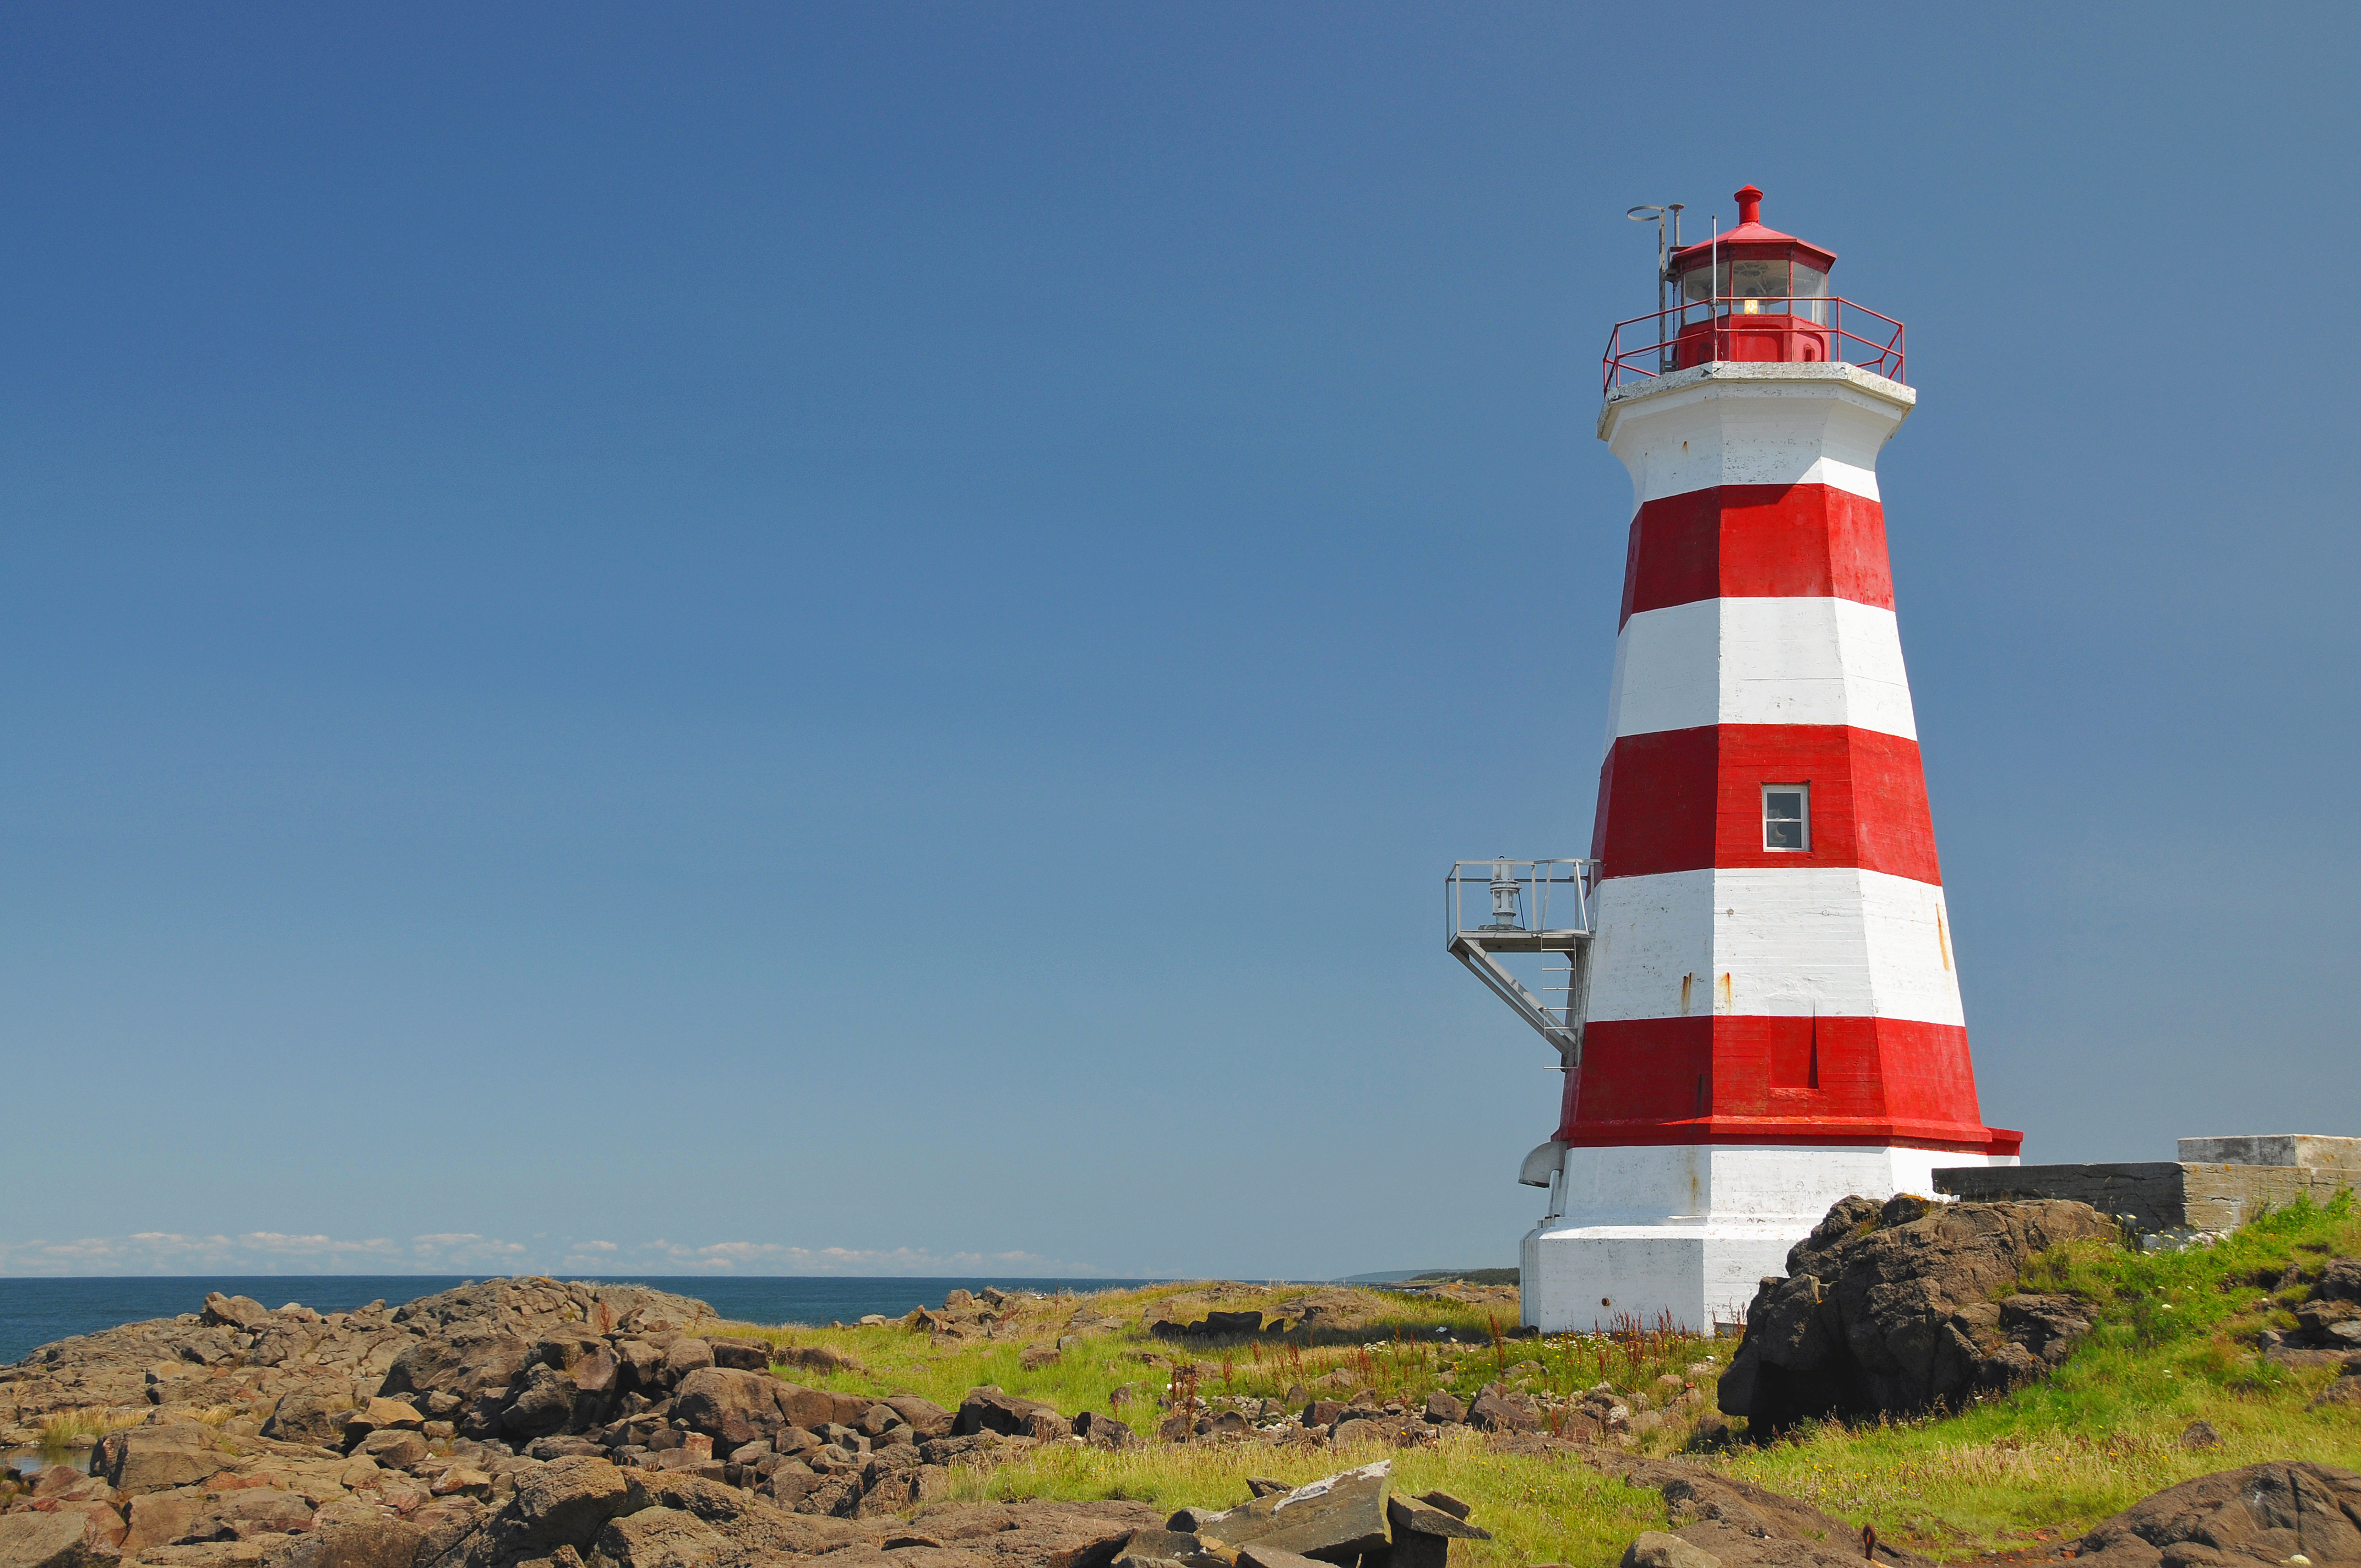 File:Brier Island Lighthouse (1).jpg - Wikimedia Commons